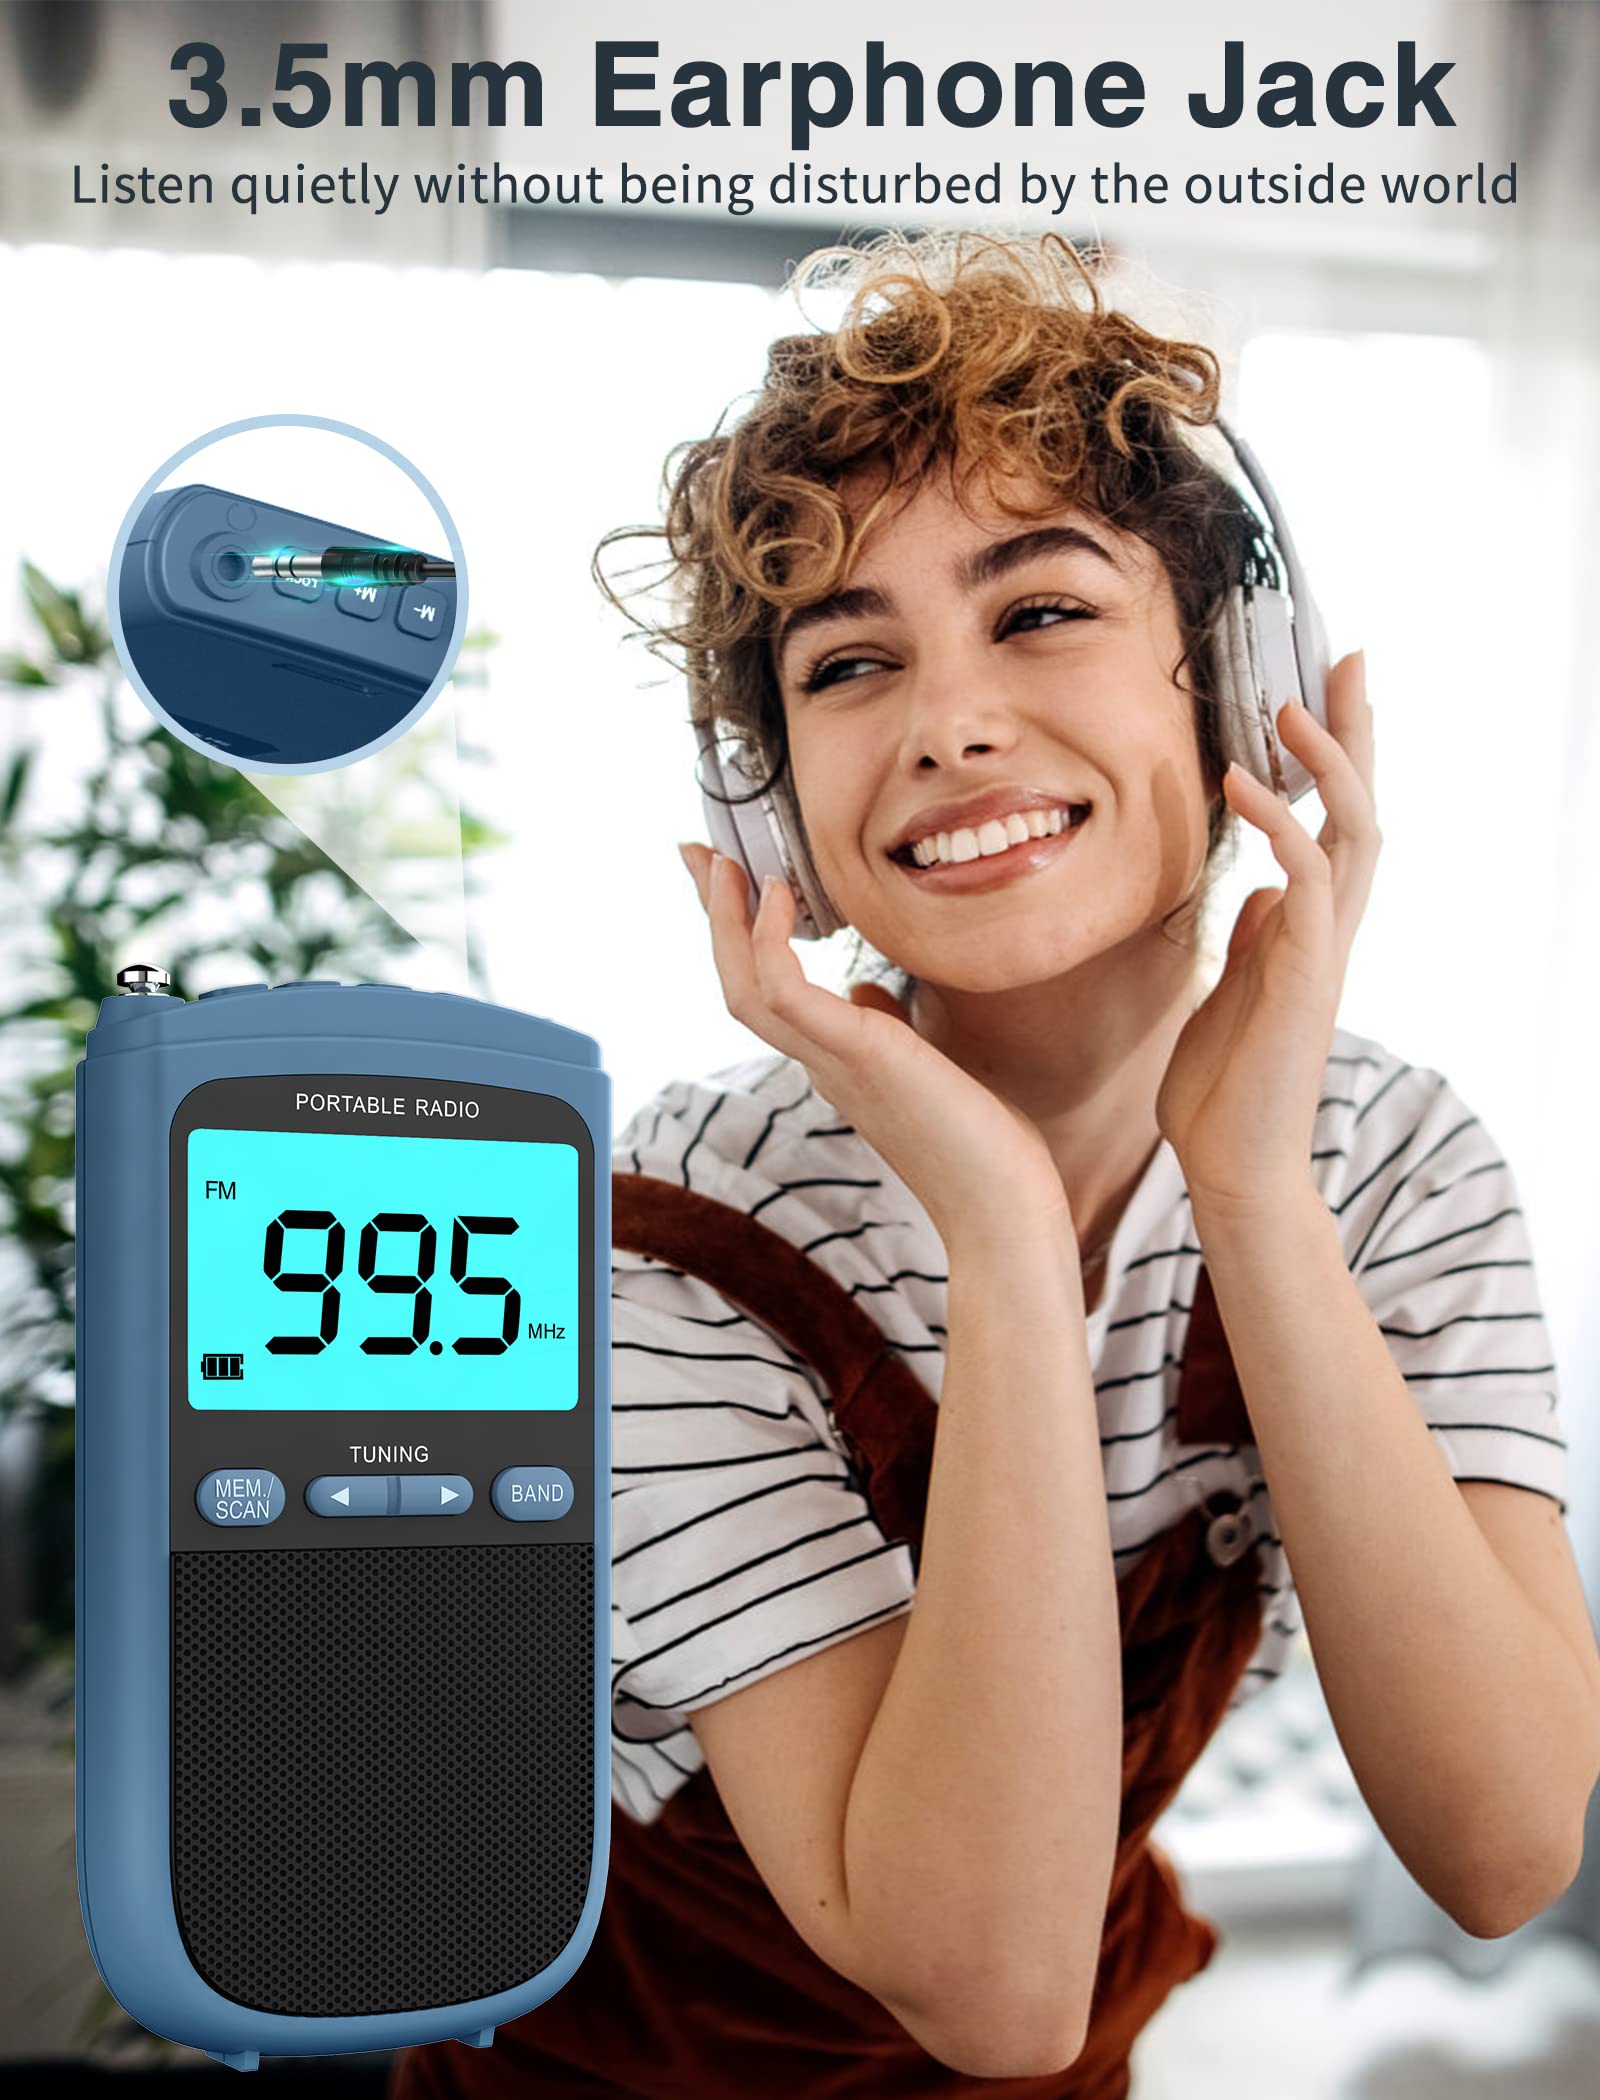 AM FM Walkman Radio: 900mAh Rechargeable Portable Transistor Pocket Radio with Best Reception Digital Tuning, LCD Screen,Stereo Earphone Jack, Sleep Timer and Alarm Clock for Jogging,Walking(Blue)